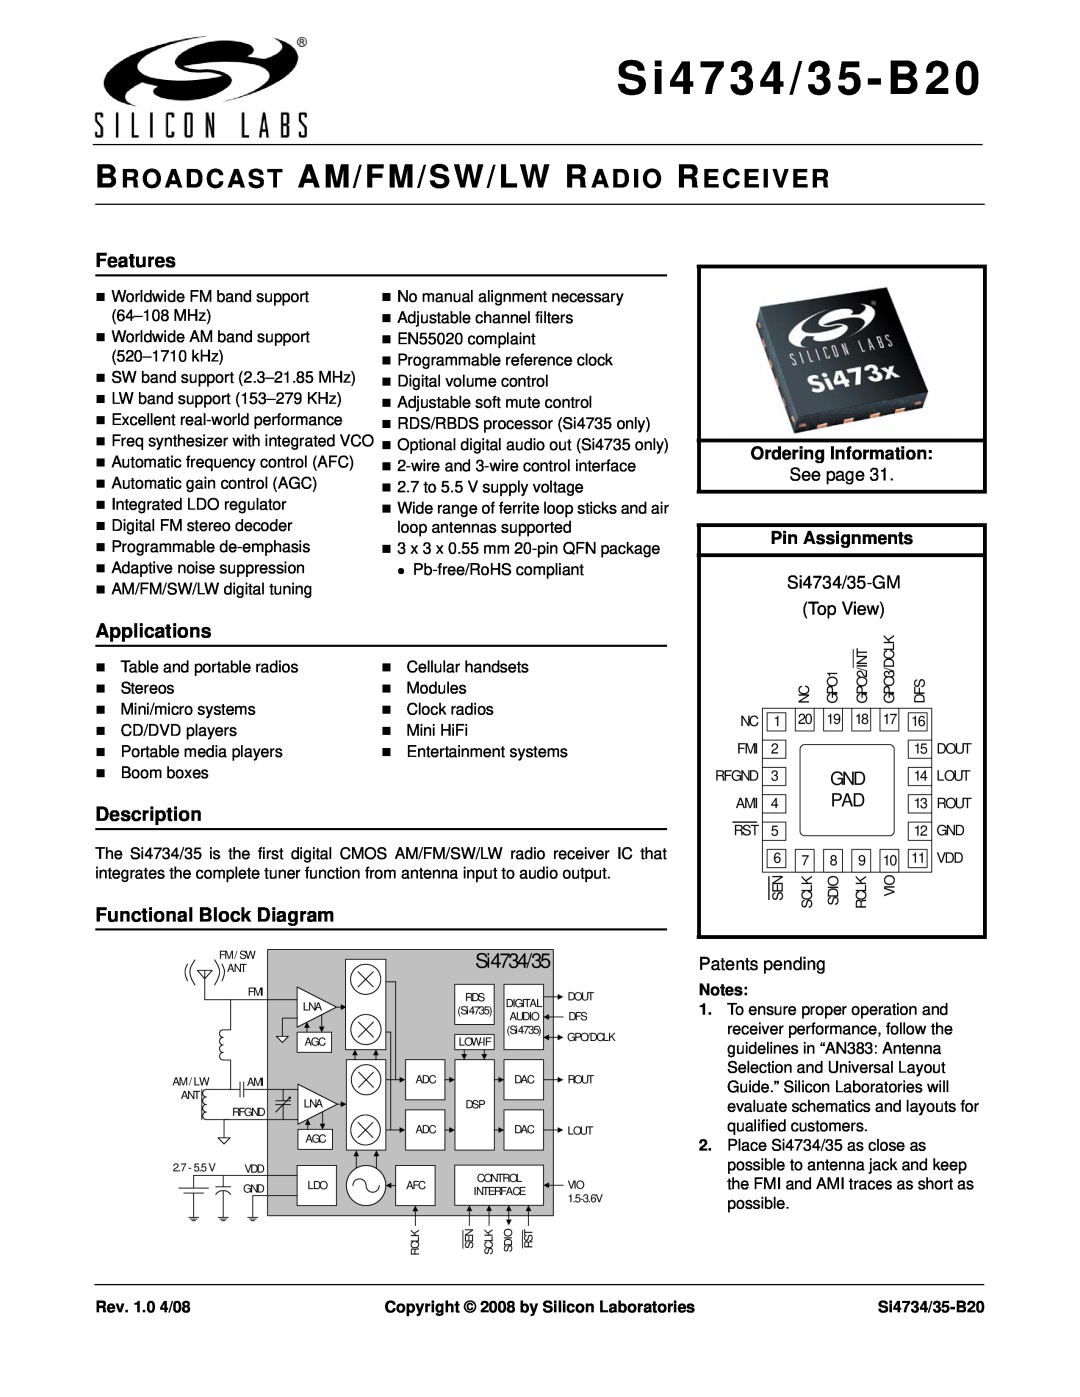 Silicon Laboratories SI4734/35-B20 manual Broadcast Am/Fm/Sw/Lw Radio Receiver, Si4734/35-B20, Gnd Pad, Rev. 1.0 4/08 